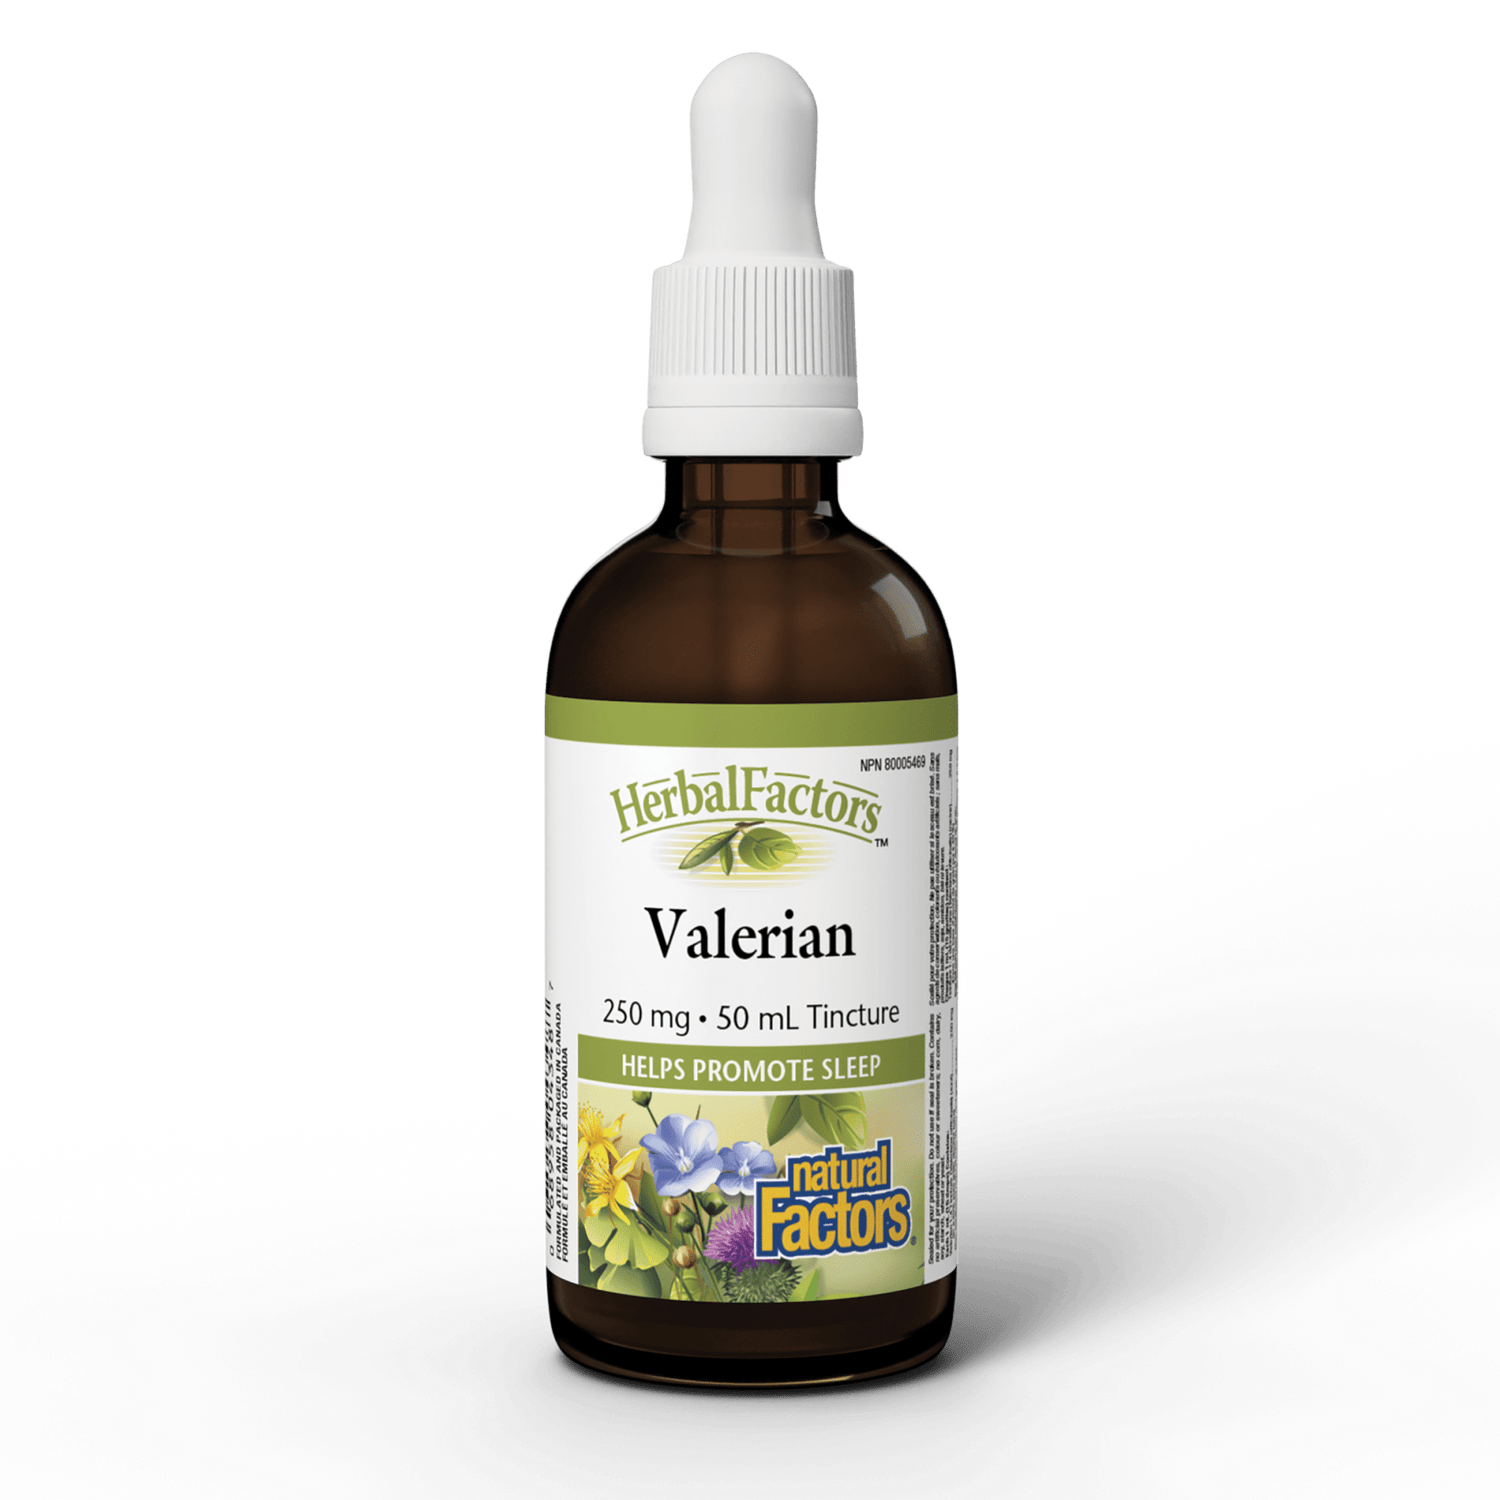 Valerian 250 mg, HerbalFactors, Natural Factors|v|image|4348